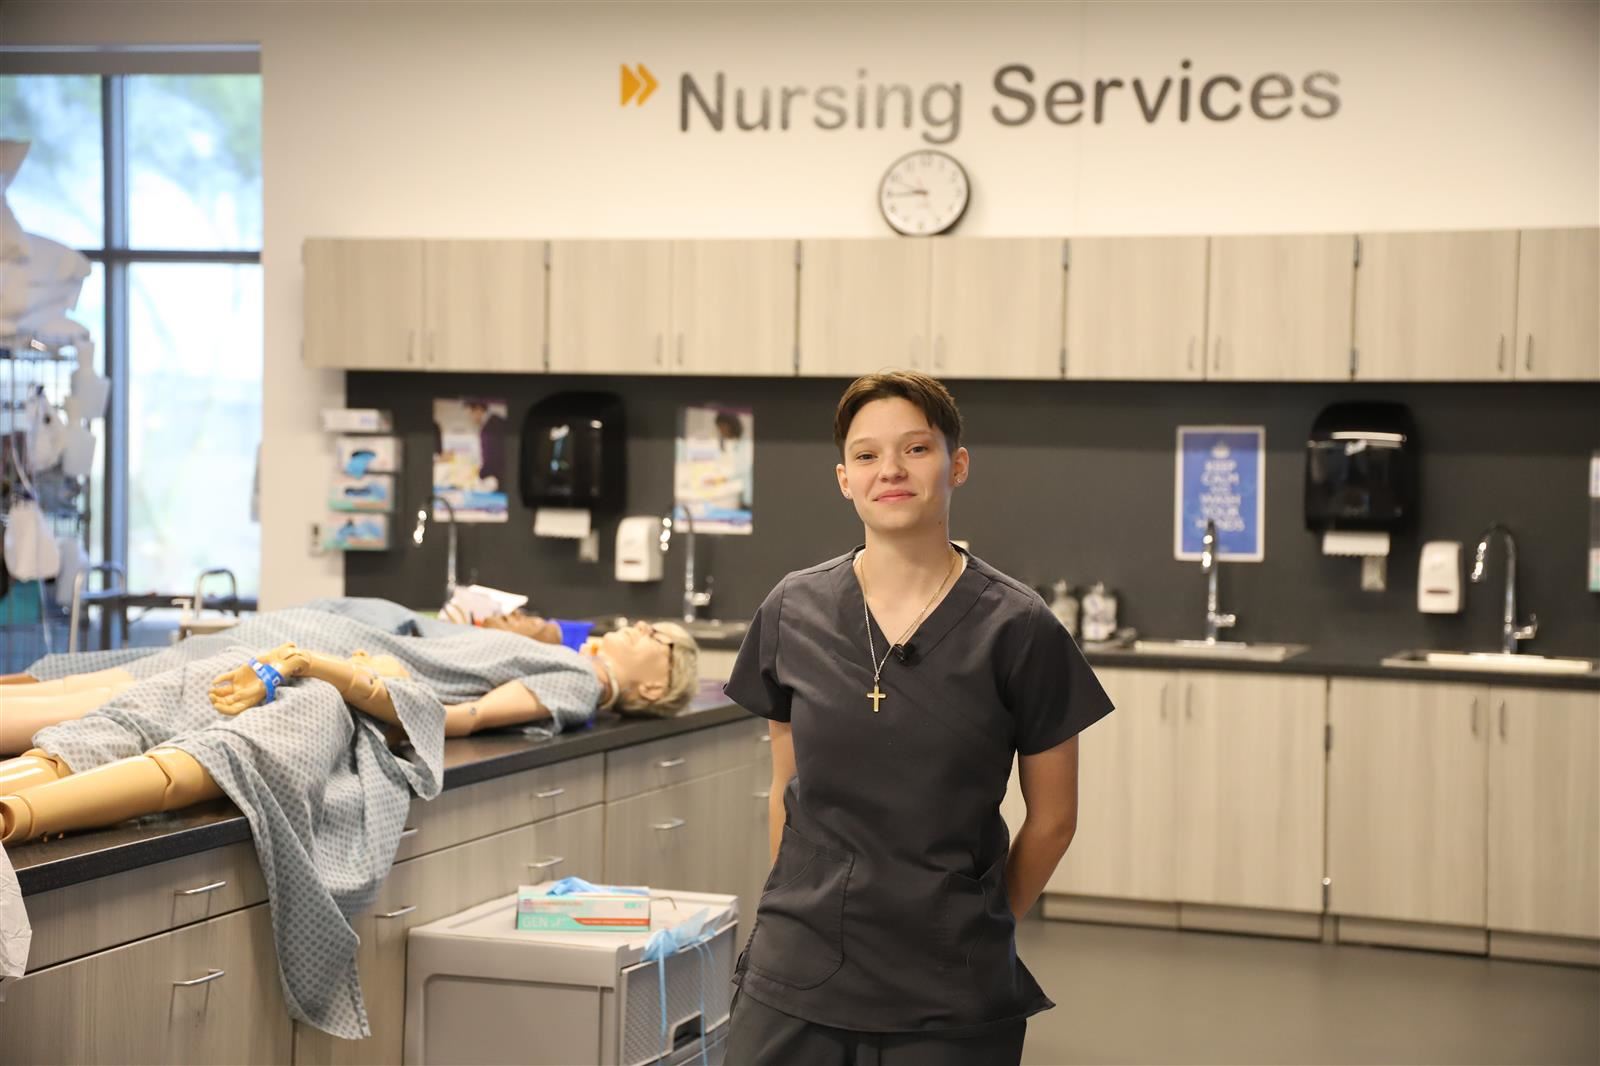 West-MEC Nursing Student Saves Life